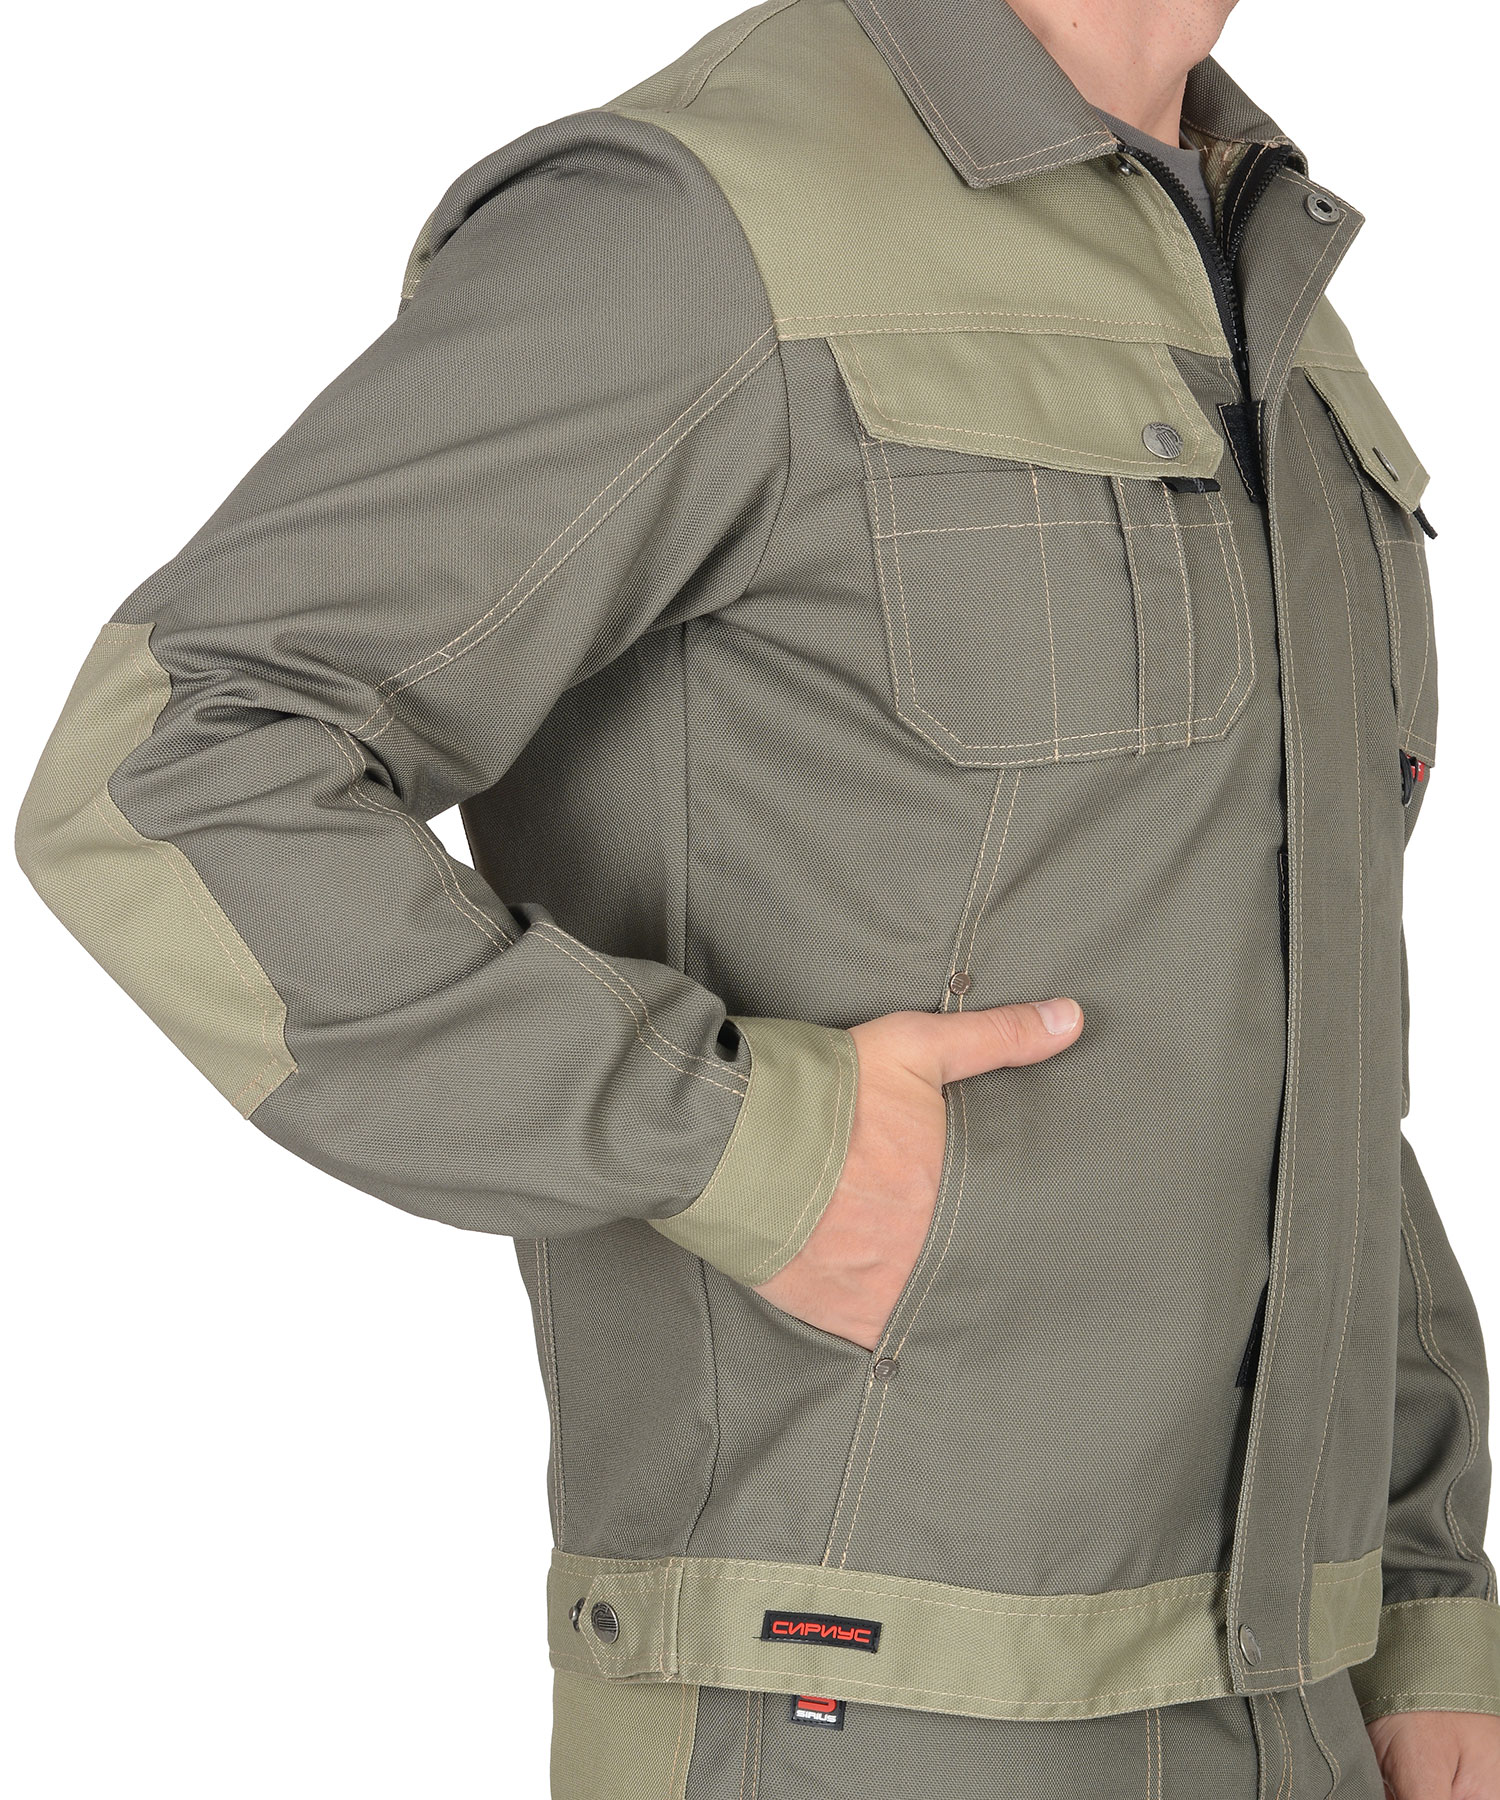 Куртка ВЕСТ-ВОРК коротка, т.оливковая со св.оливковым